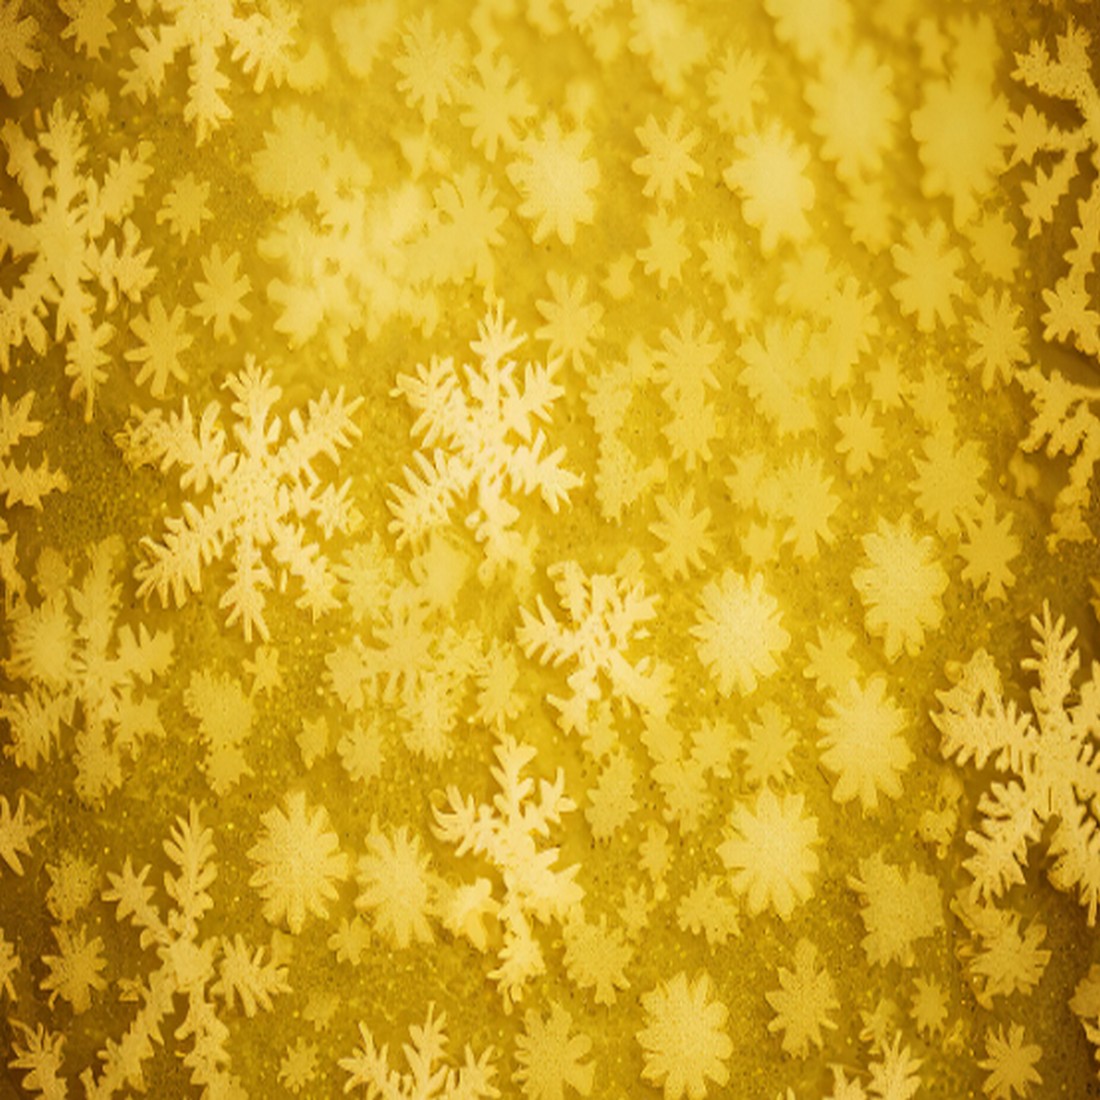 yellow snow flakes background texture1 249